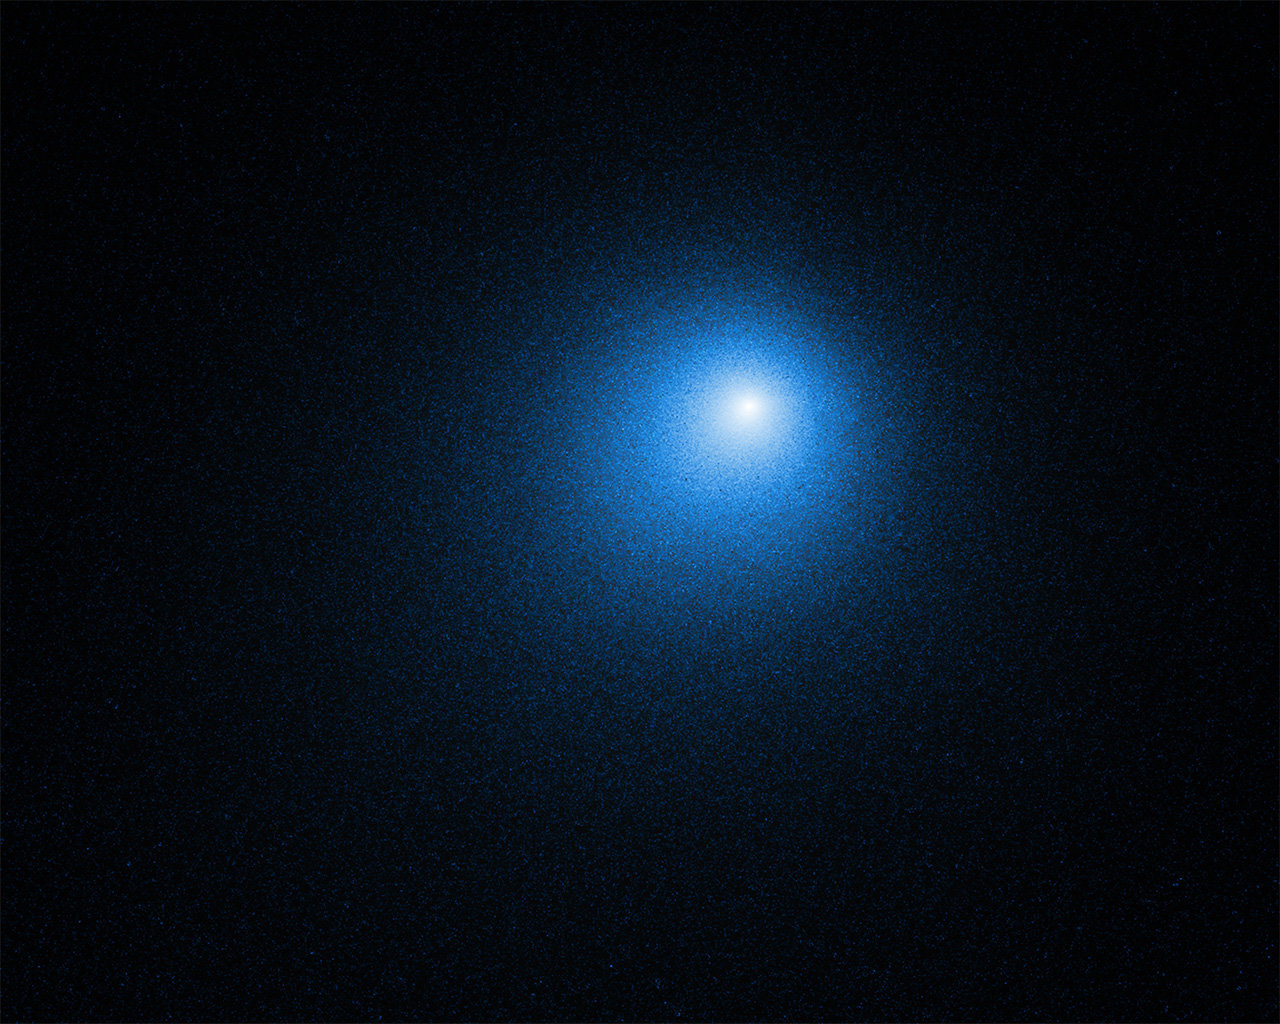 Bluish comet traveling through space.